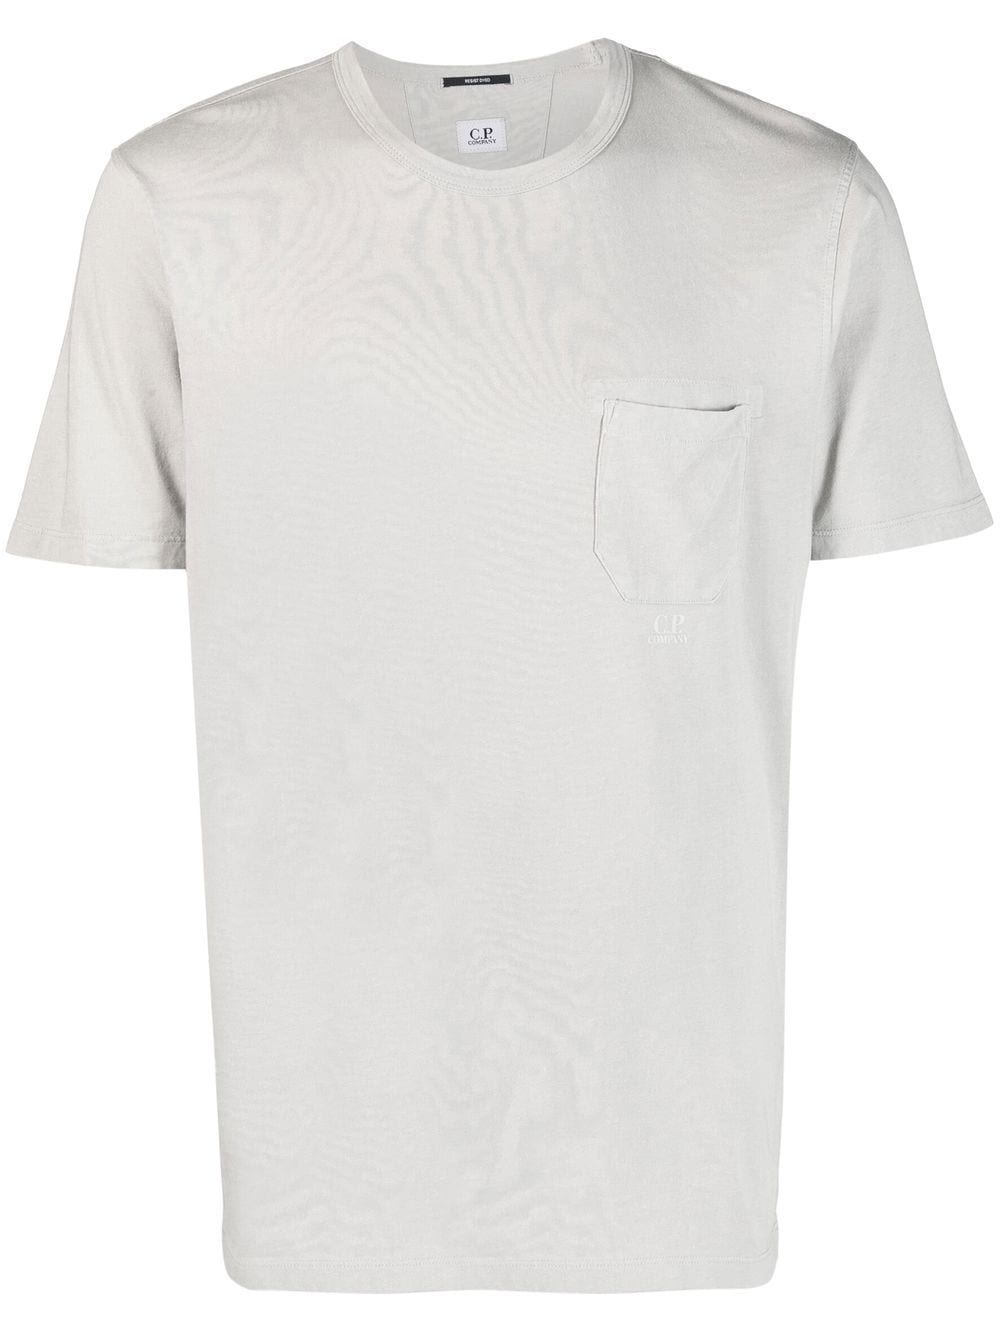 C.P. Company chest-pocket T-shirt - Grey von C.P. Company